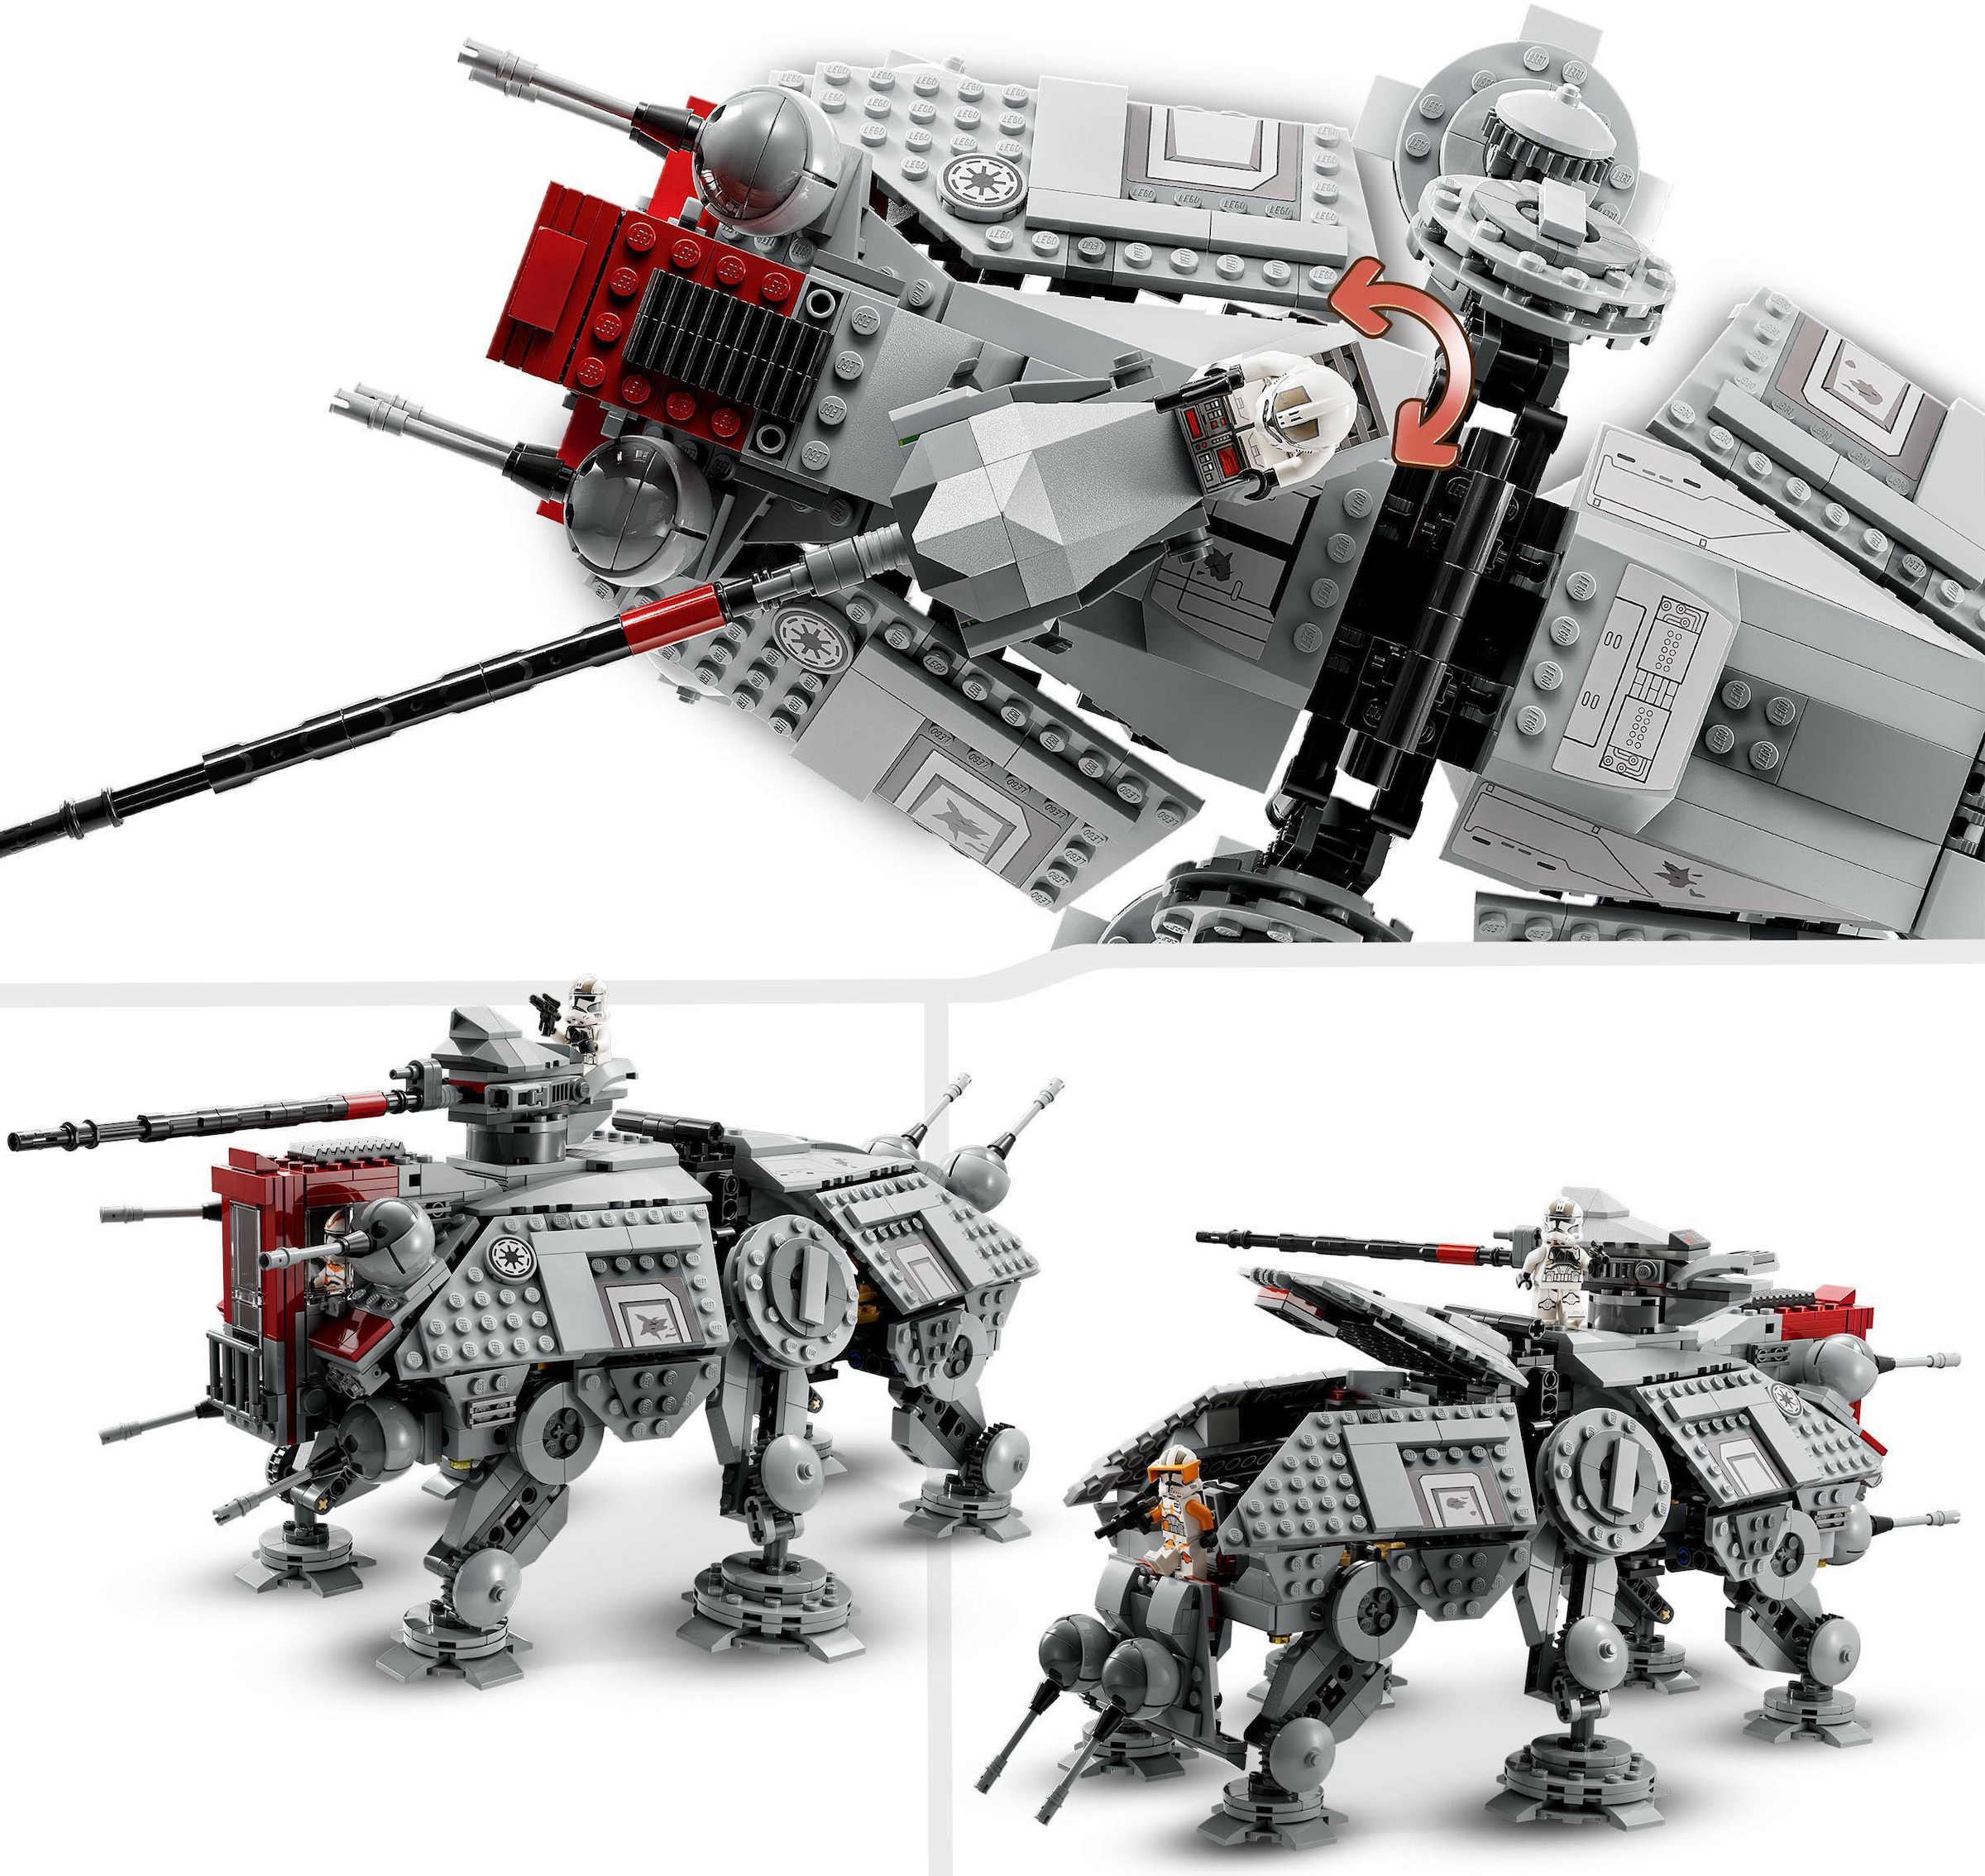 LEGO® Konstruktionsspielsteine »AT-TE Walker (75337), LEGO® Star Wars™«, (1082 St.), Made in Europe